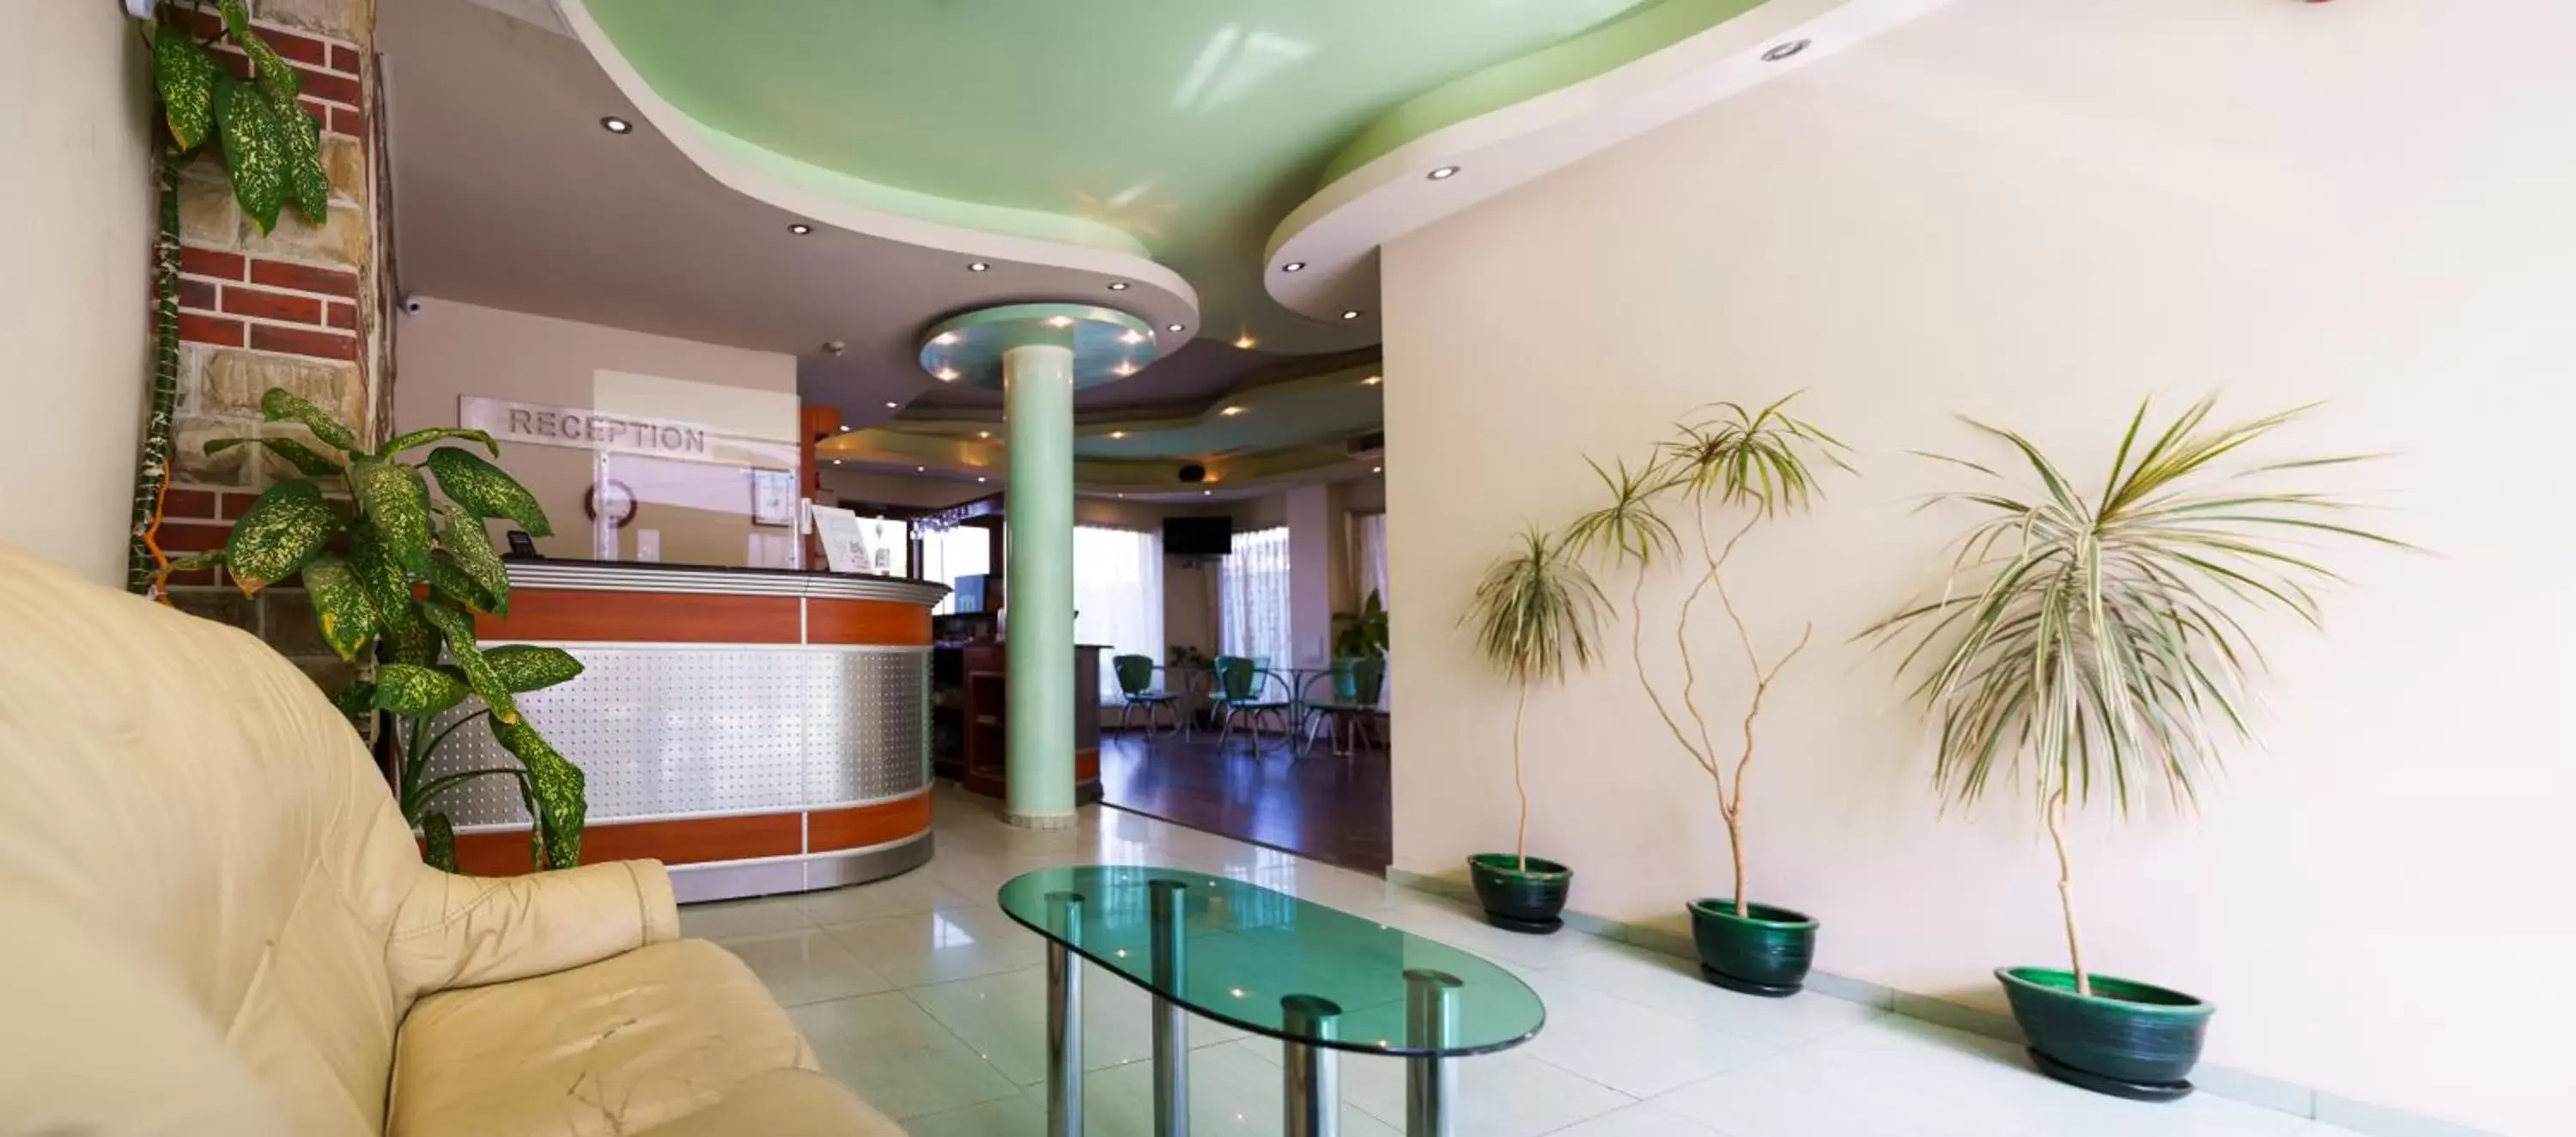 Lobby or reception, Lobby/Reception in Dionis Hotel